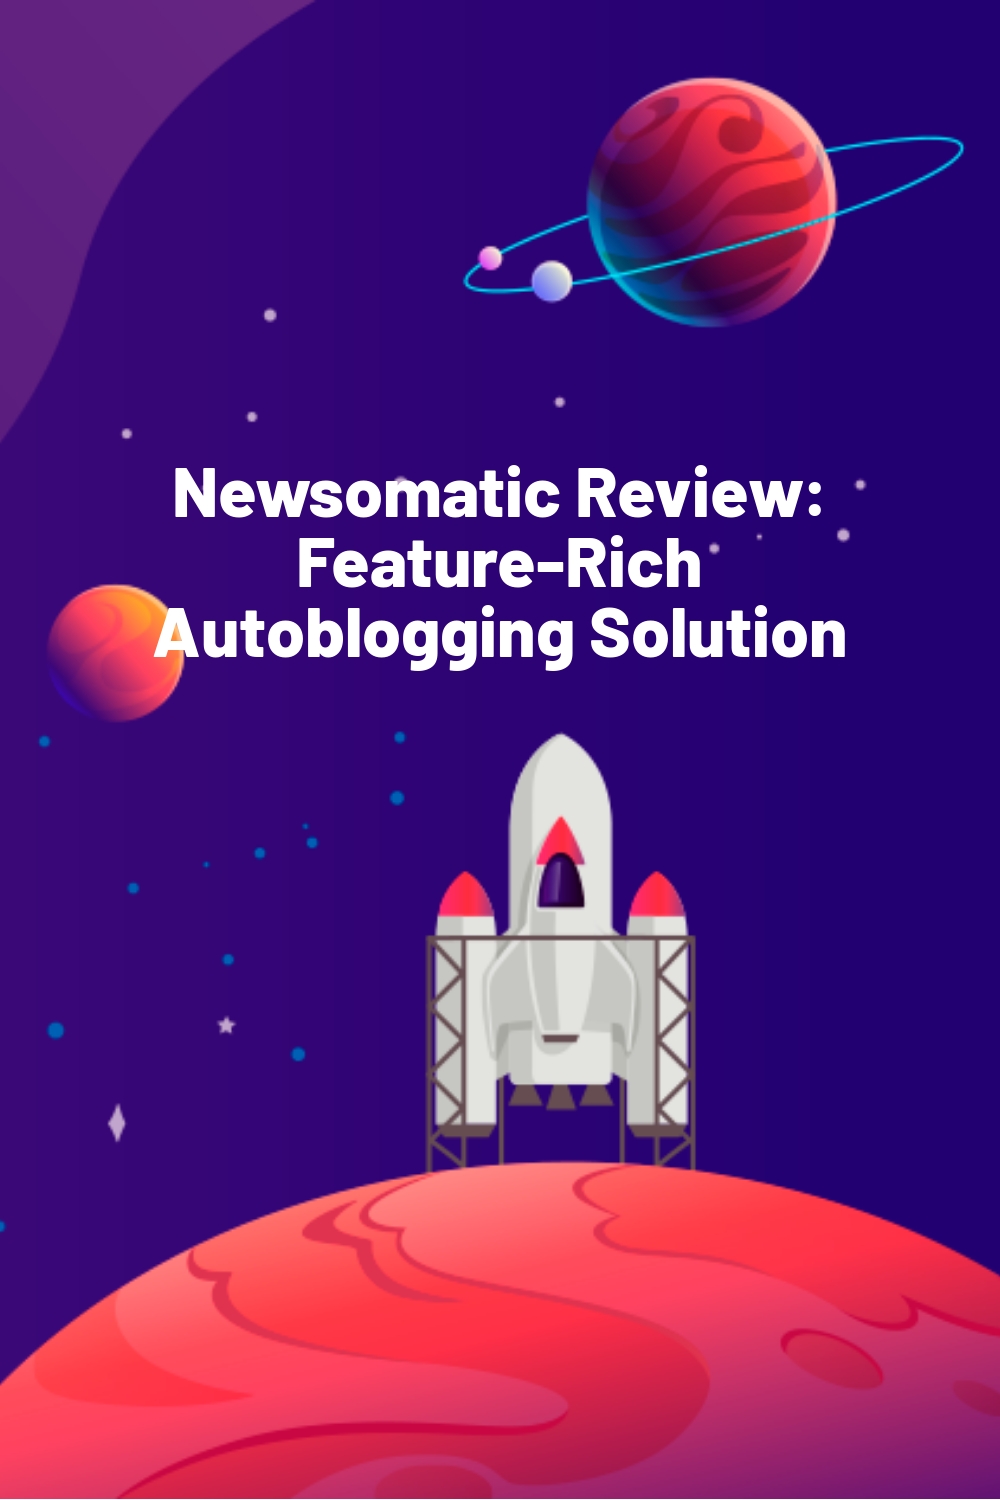 Newsomatic Review: Feature-Rich Autoblogging Solution